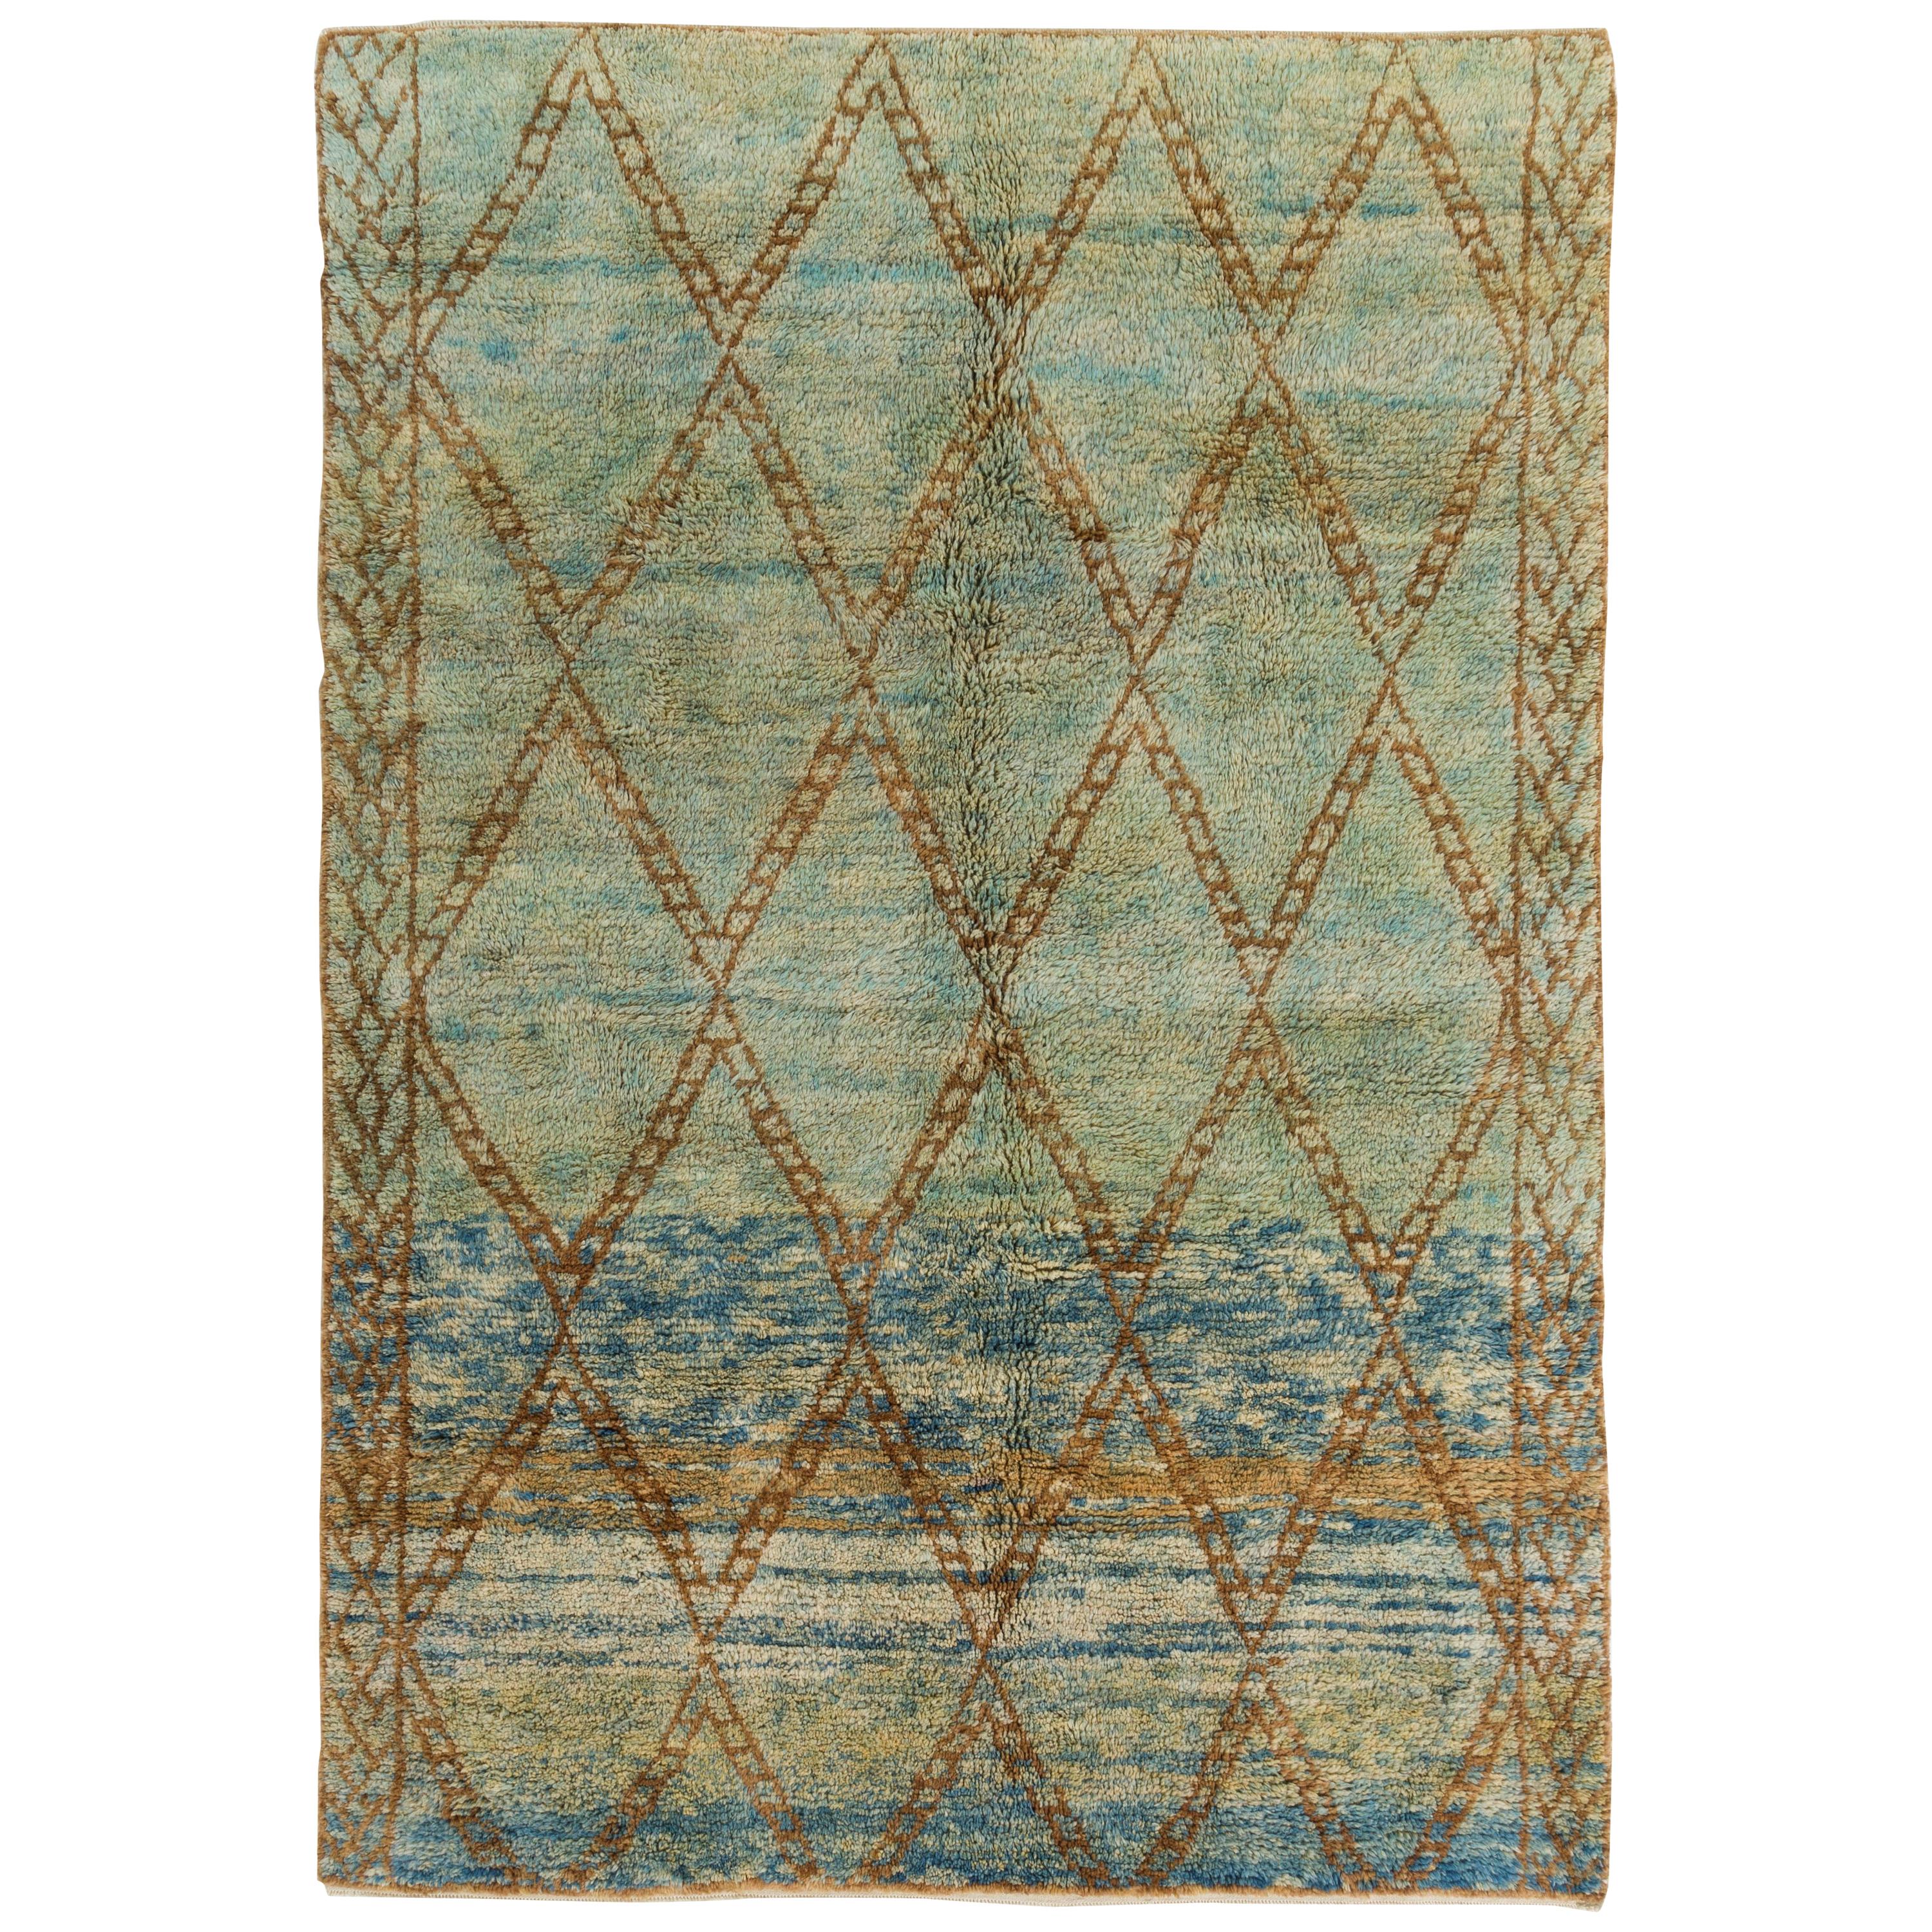 7.2x10.4 ft Handmade Moroccan Wool Rug in Blue, Green and Rust, Custom Ops Avl.